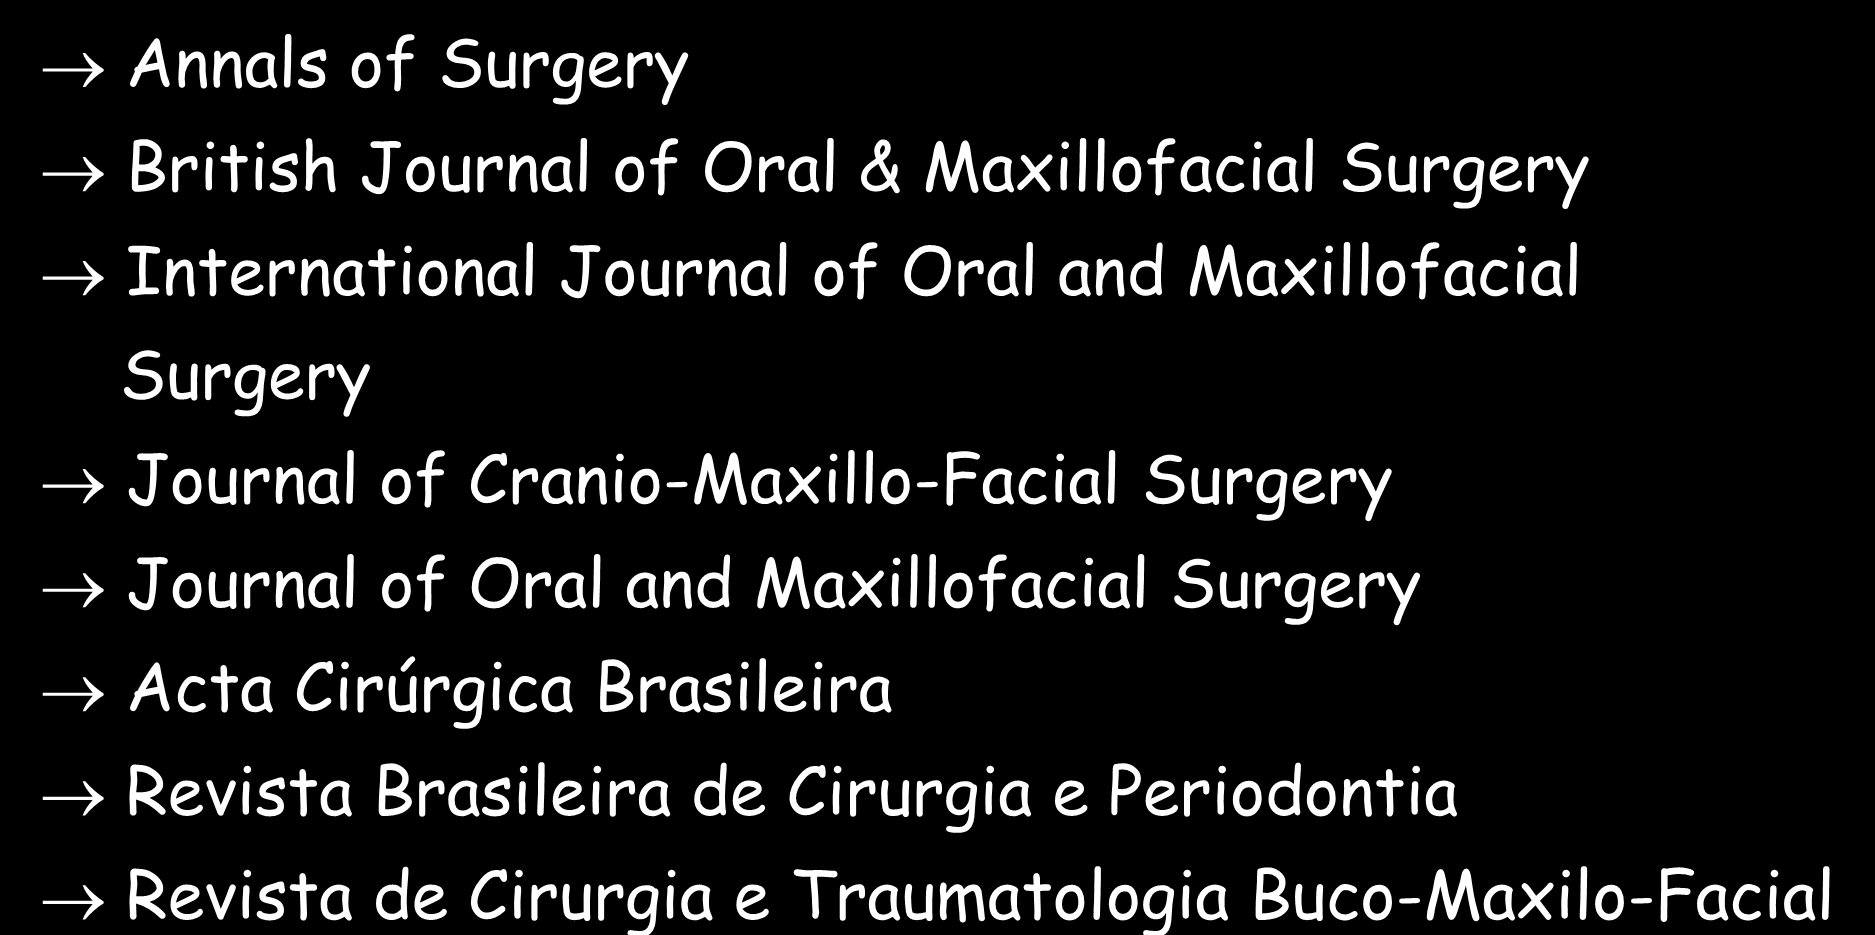 PERIÓDICOS - SUGESTÕES CIRURGIA E TRAUMATOLOGIA BUCO MAXILO FACIAIS Annals of Surgery British Journal of Oral & Maxillofacial Surgery International Journal of Oral and Maxillofacial Surgery Journal